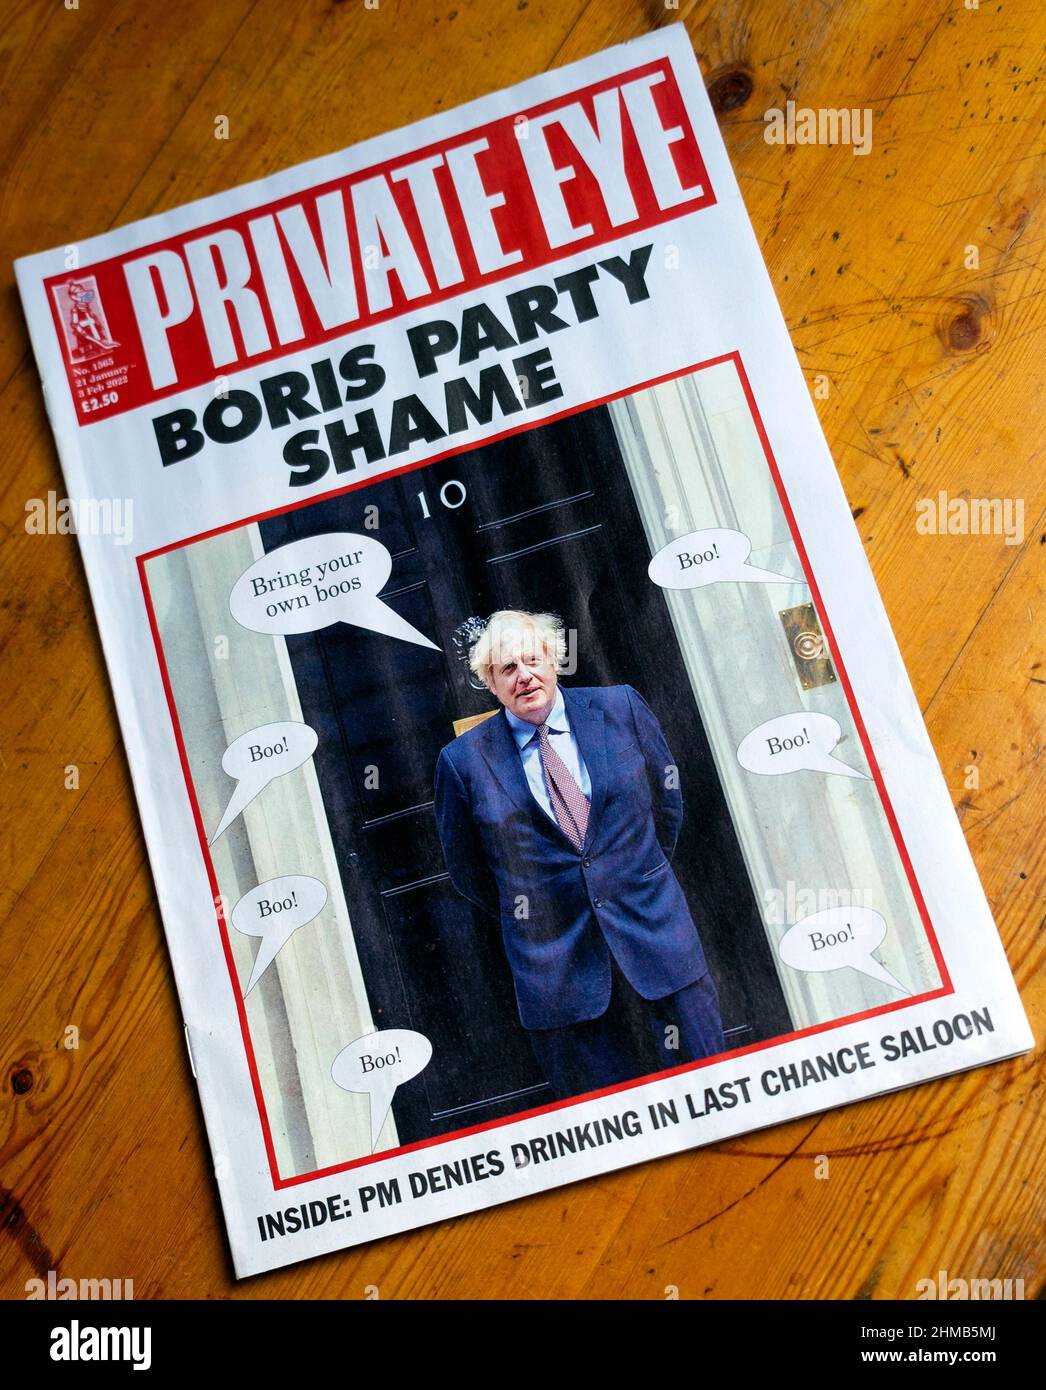 Boris Johnson partygate Number 10 Downing Street Private Eye front cover headline 'Boris Party Shame' January February issue 2022 London England UK Stock Photo